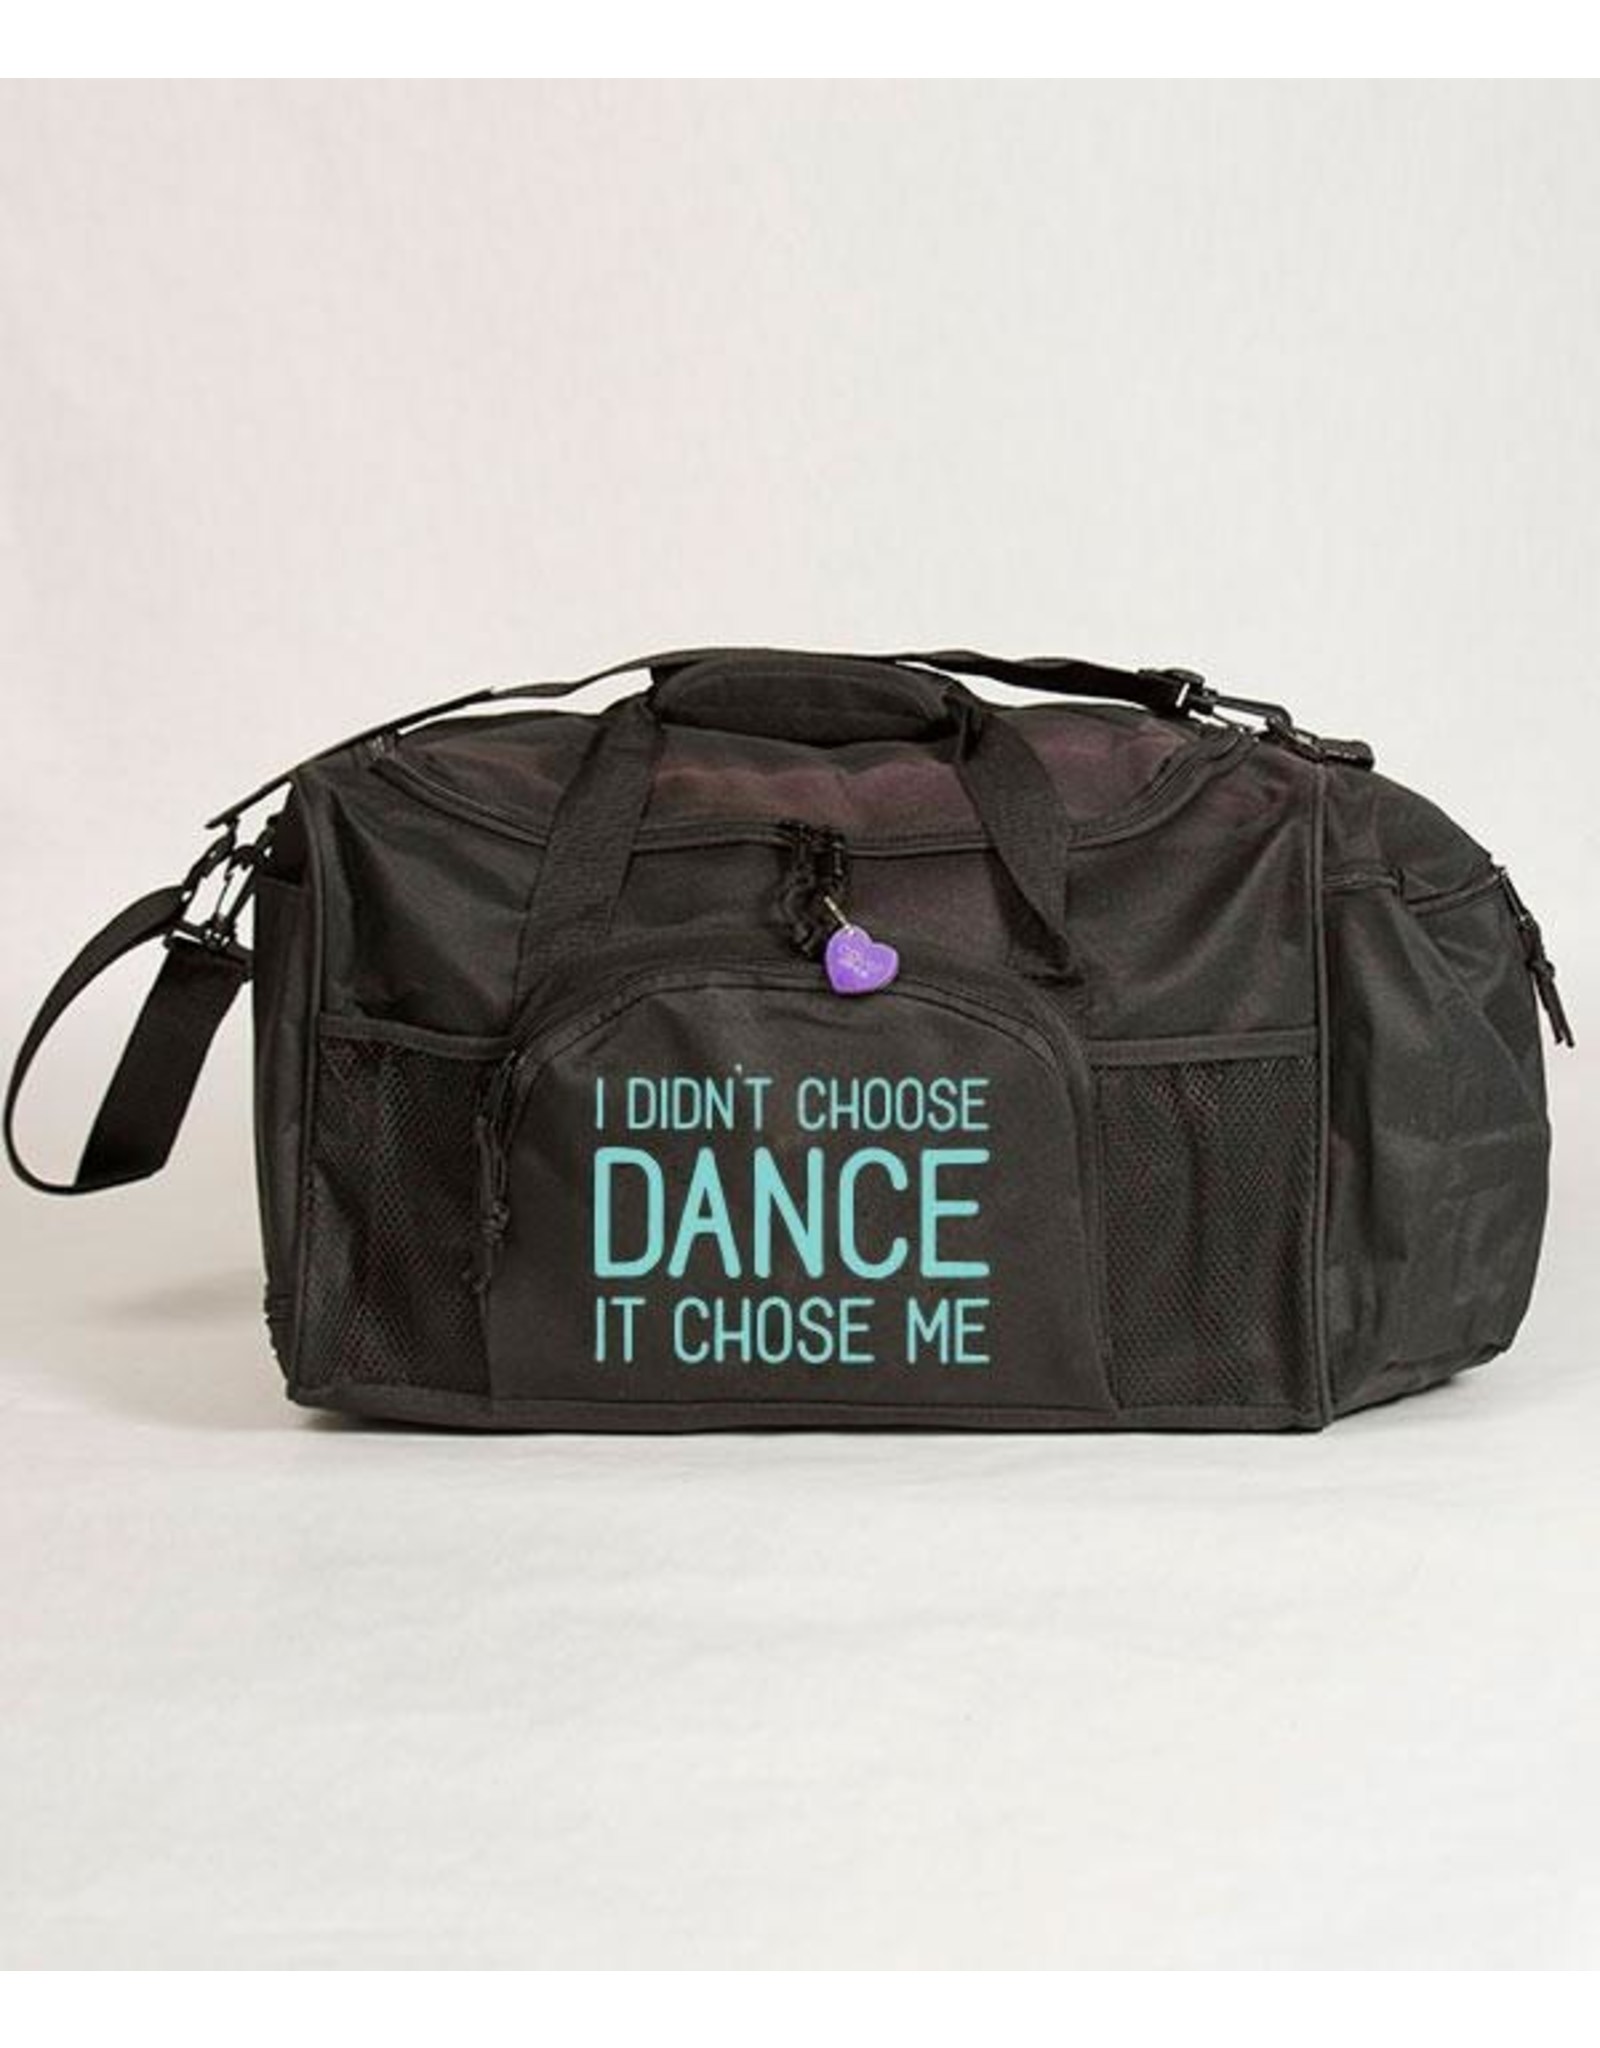 Covet Dance Covet Dance Bag-I didn't choose Dance duffle